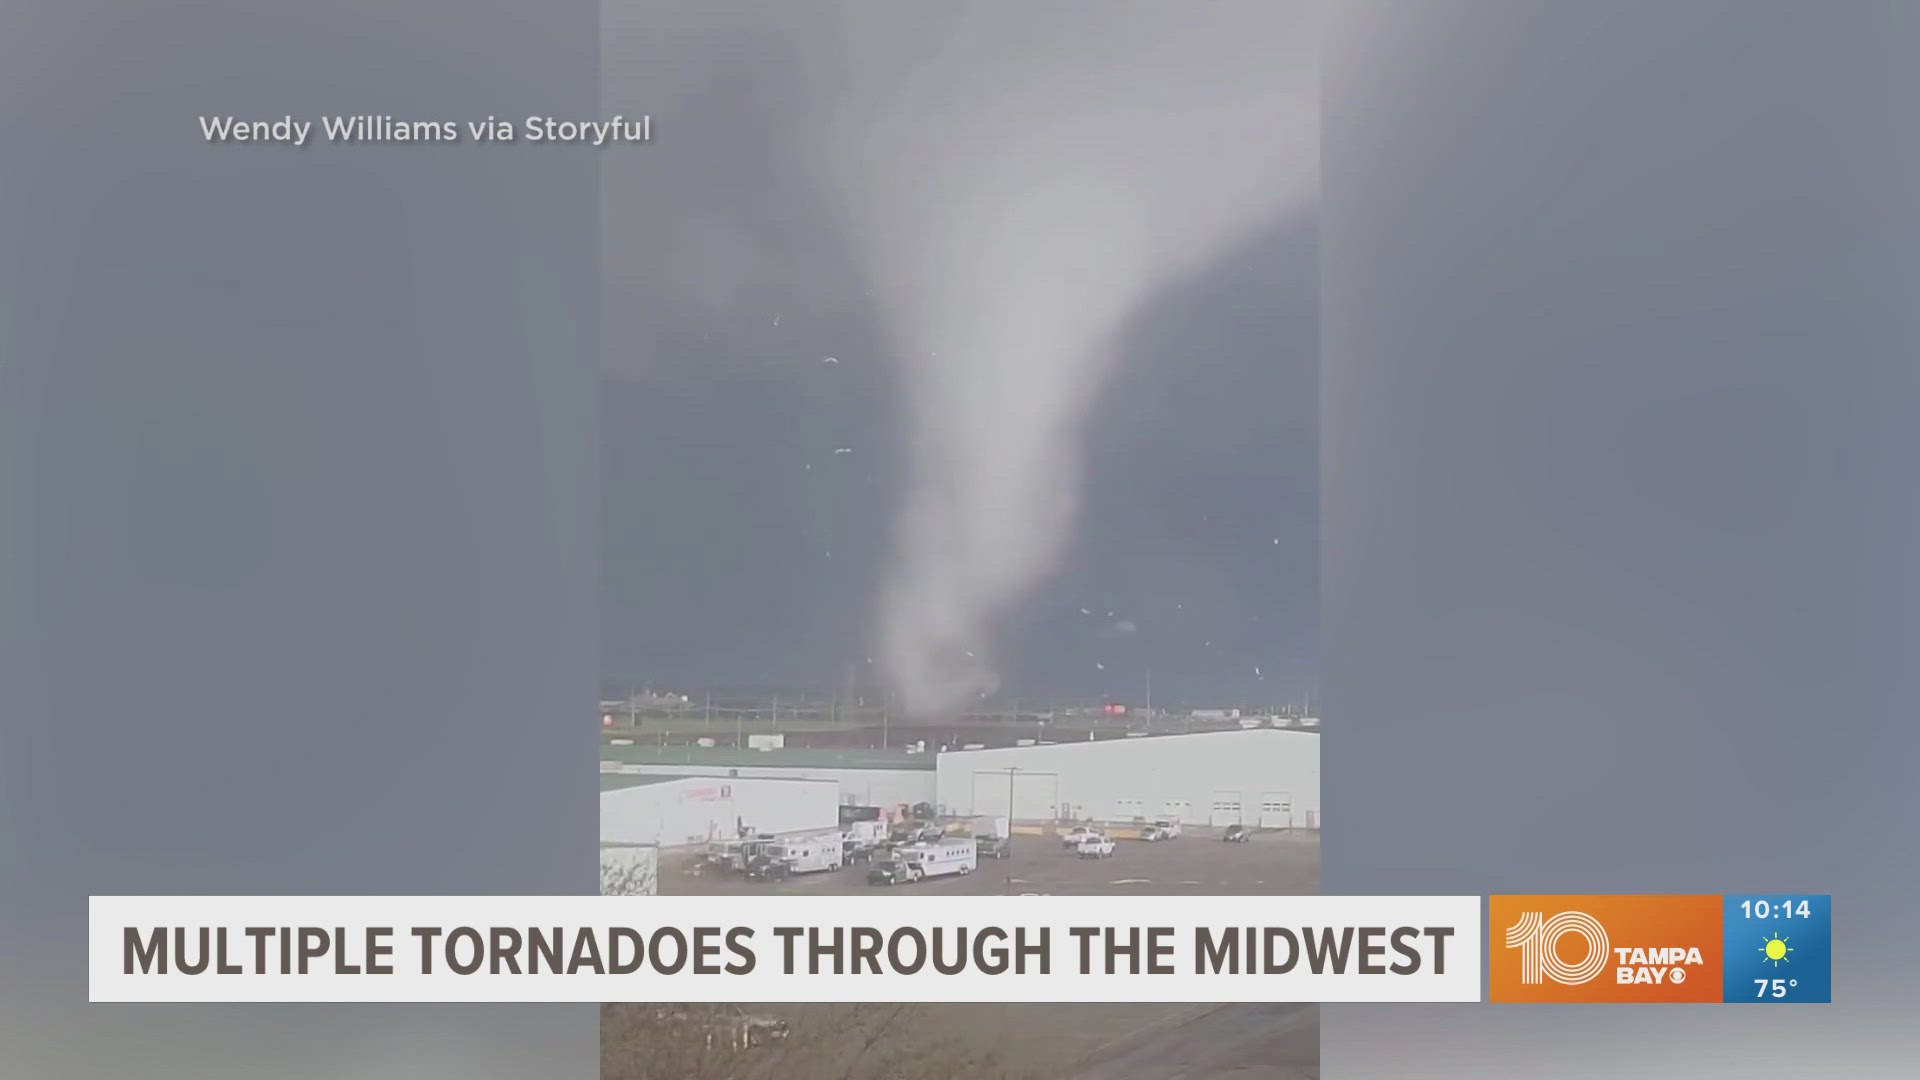 The footage captured shows a tornado in Nebraska.